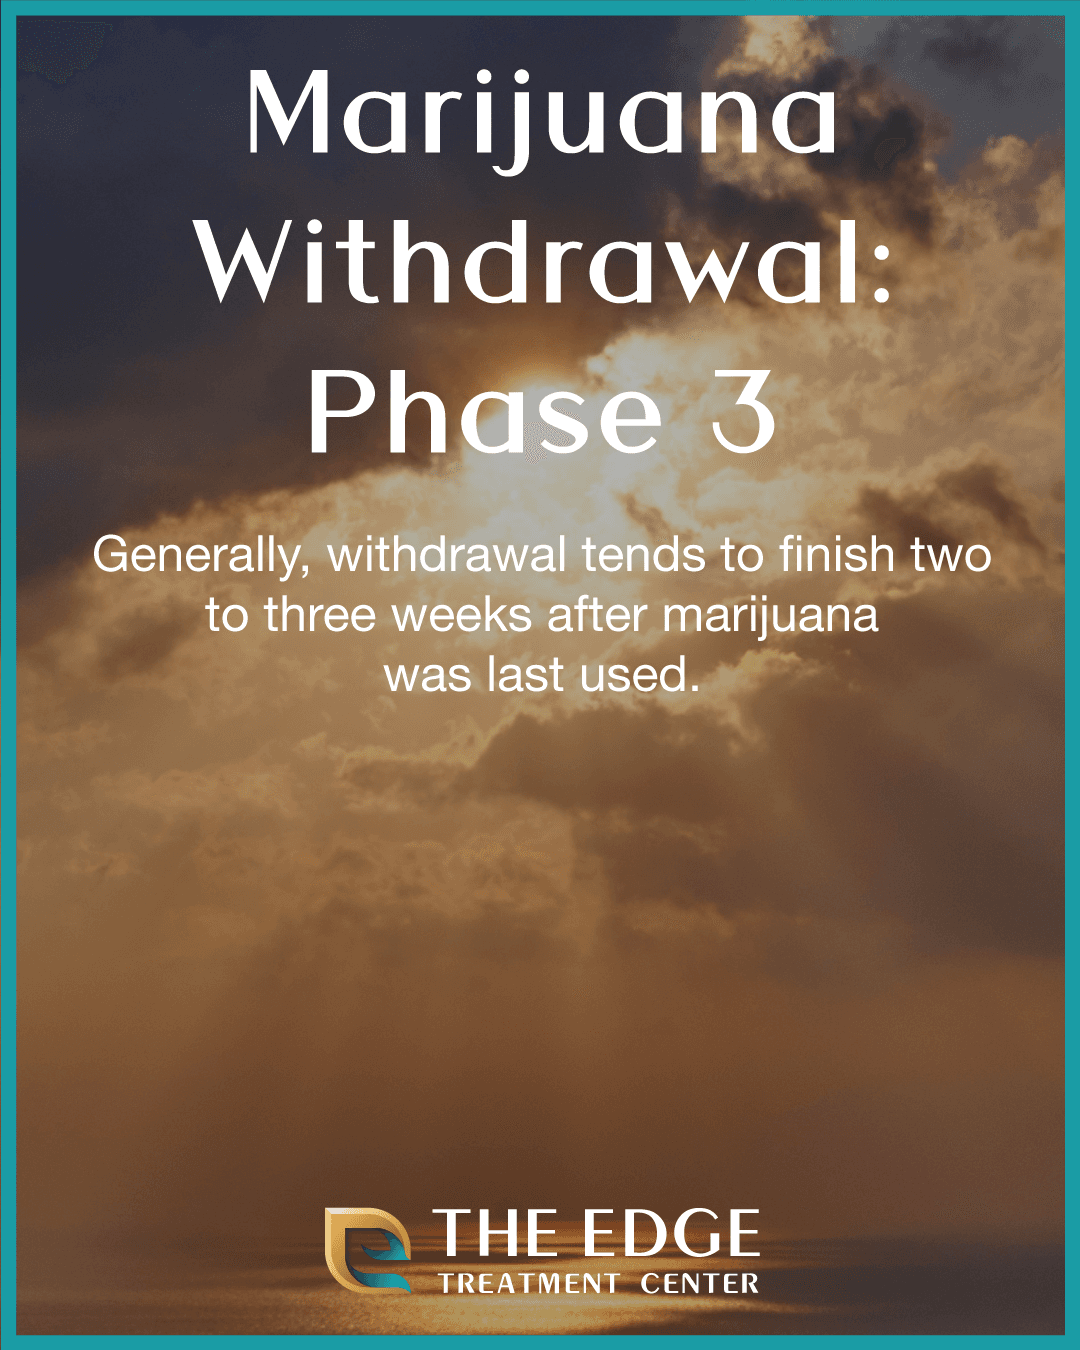 Phase 3 of Marijuana Withdrawal